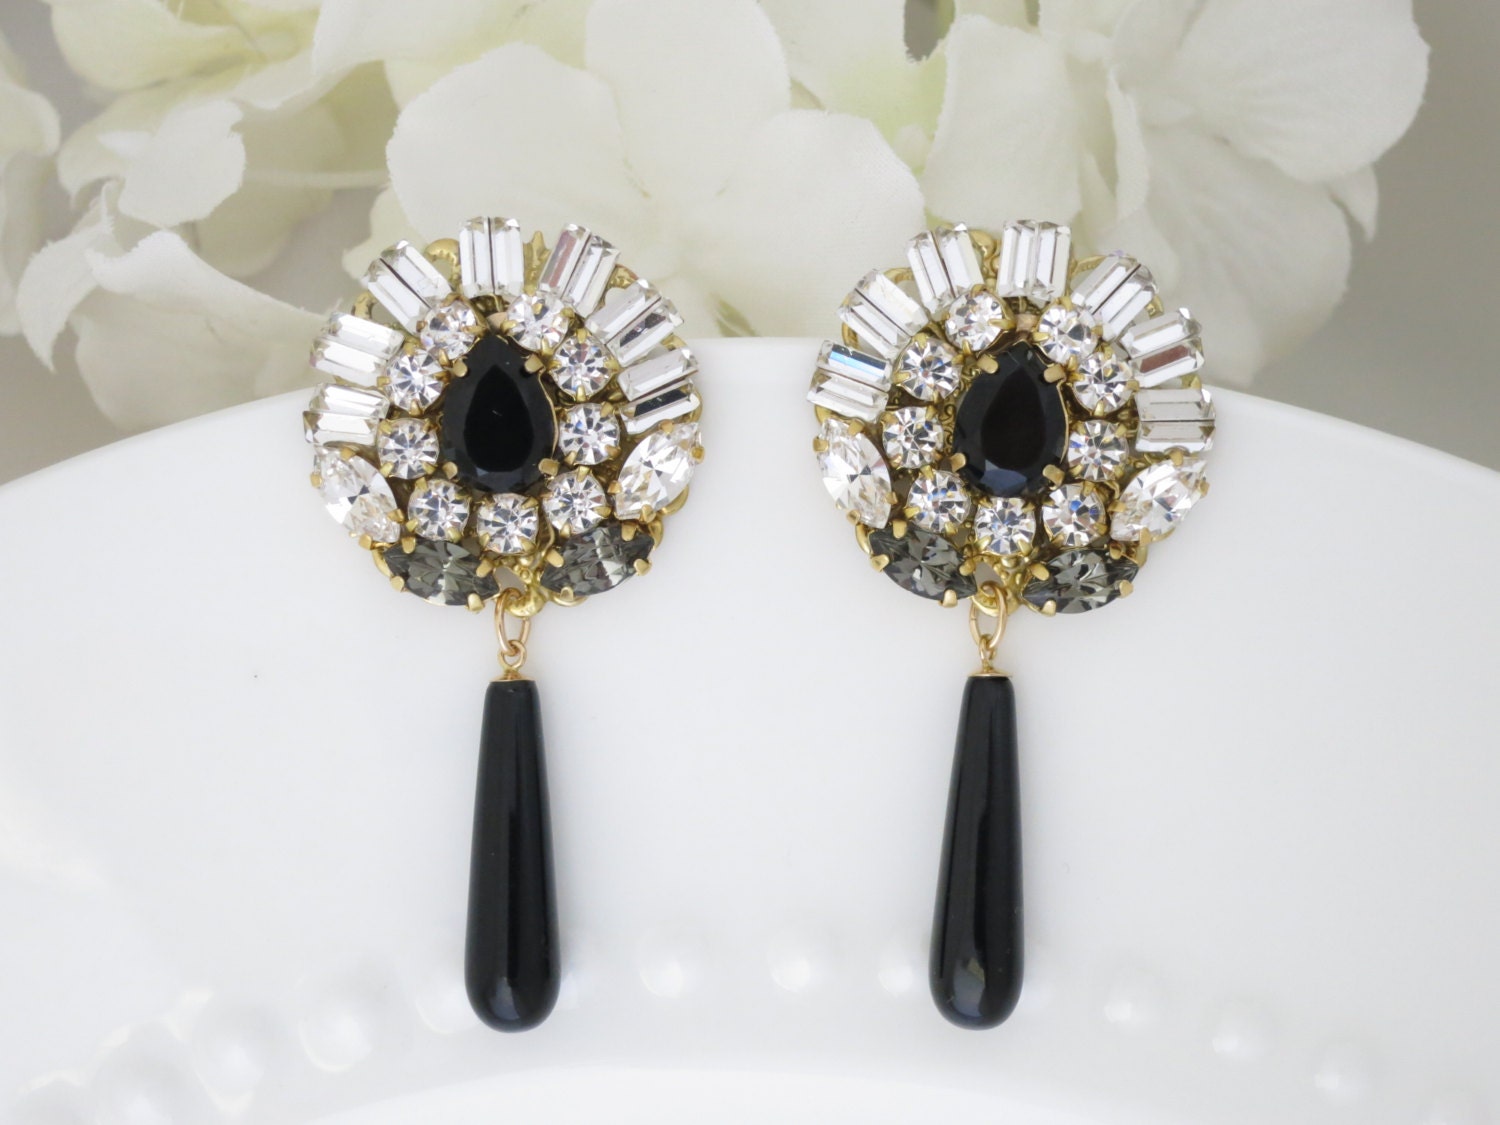 Black Onyx earrings Swarovski crystal earrings Black teardrop | Etsy